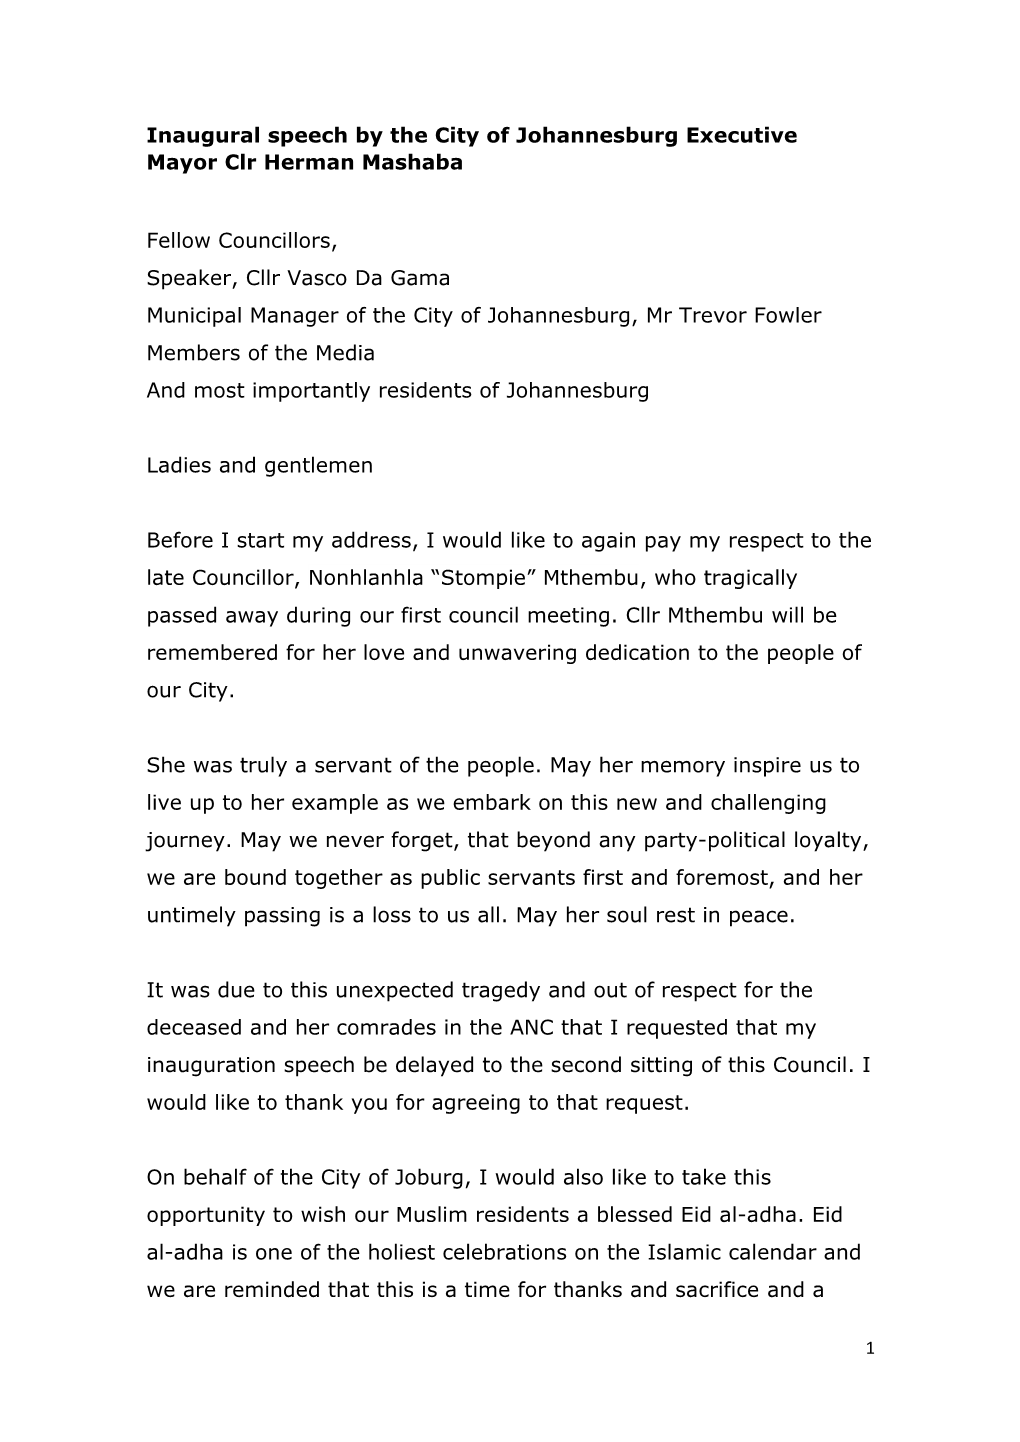 Mayor Herman Mashaba Inauguration Speech.Pdf